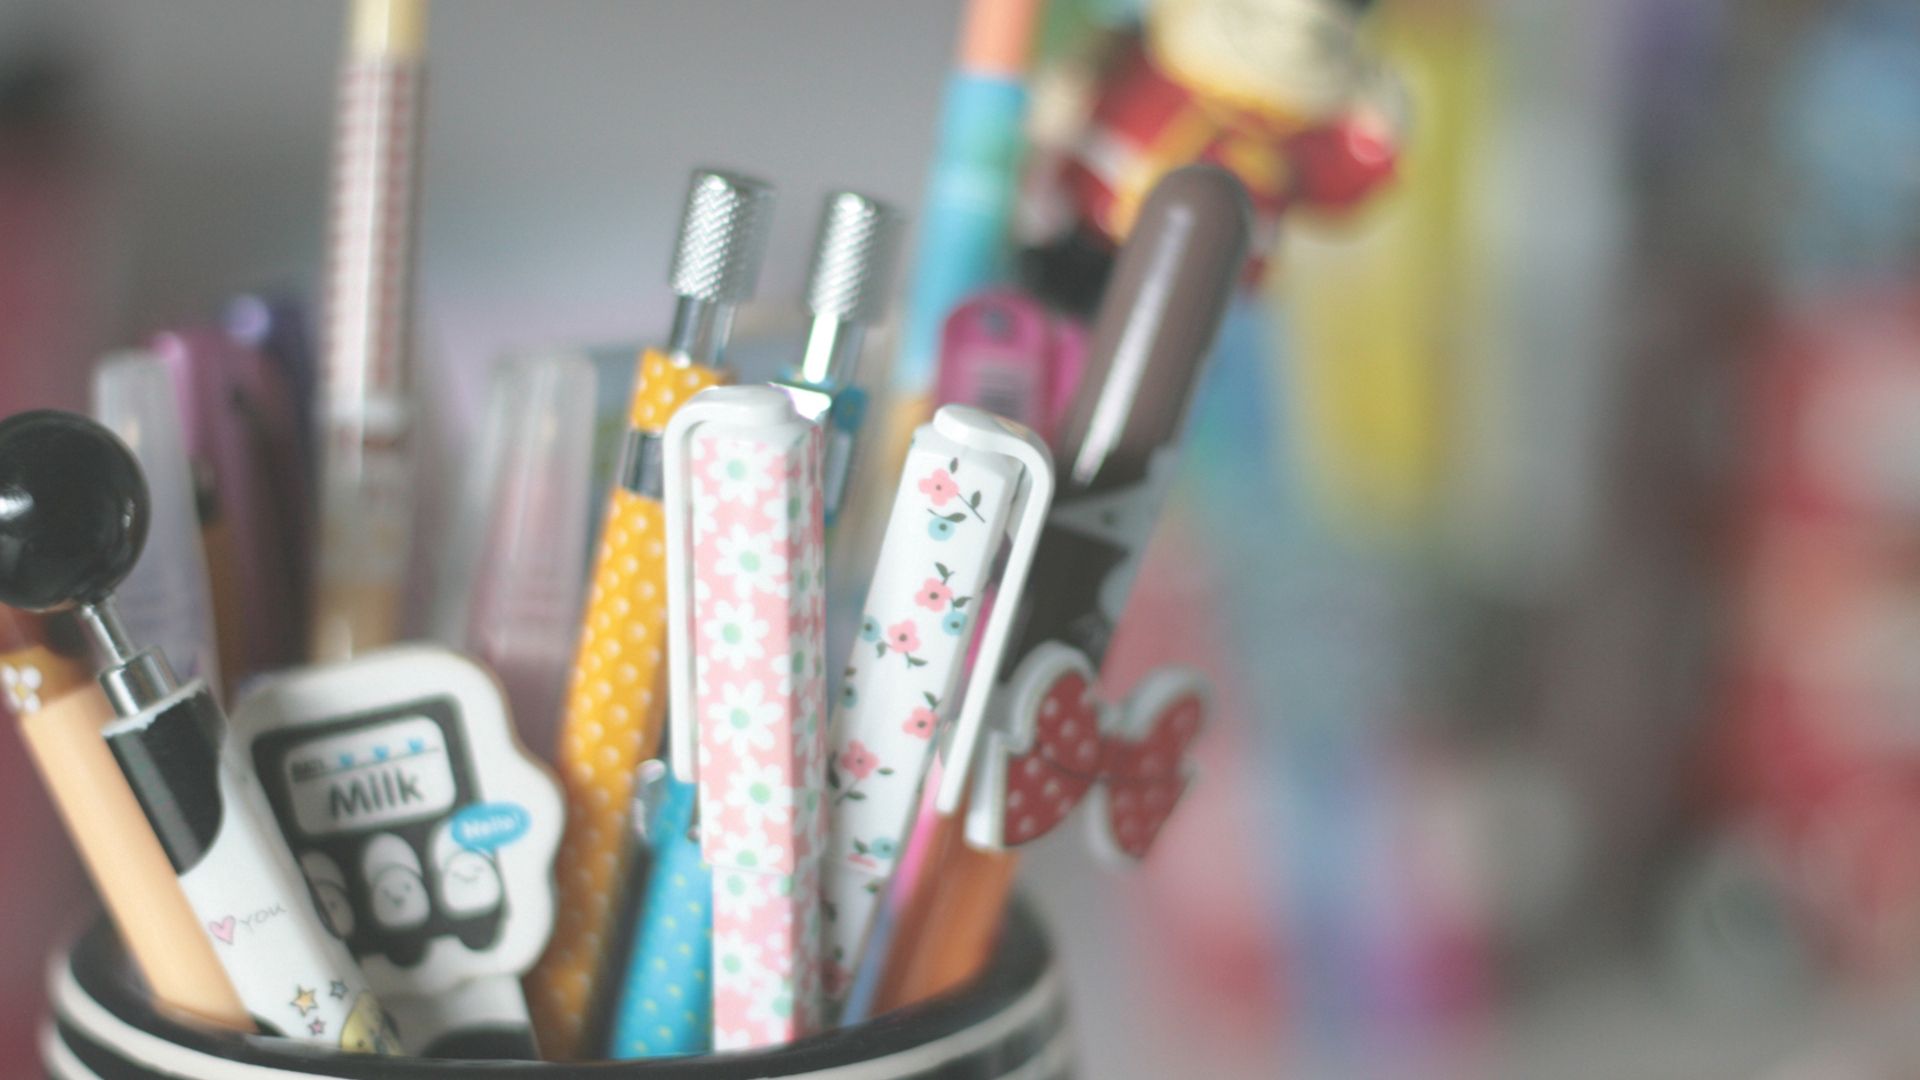 miscellanea, miscellaneous, multicolored, motley, blur, smooth, pencils, stand, pens, handles